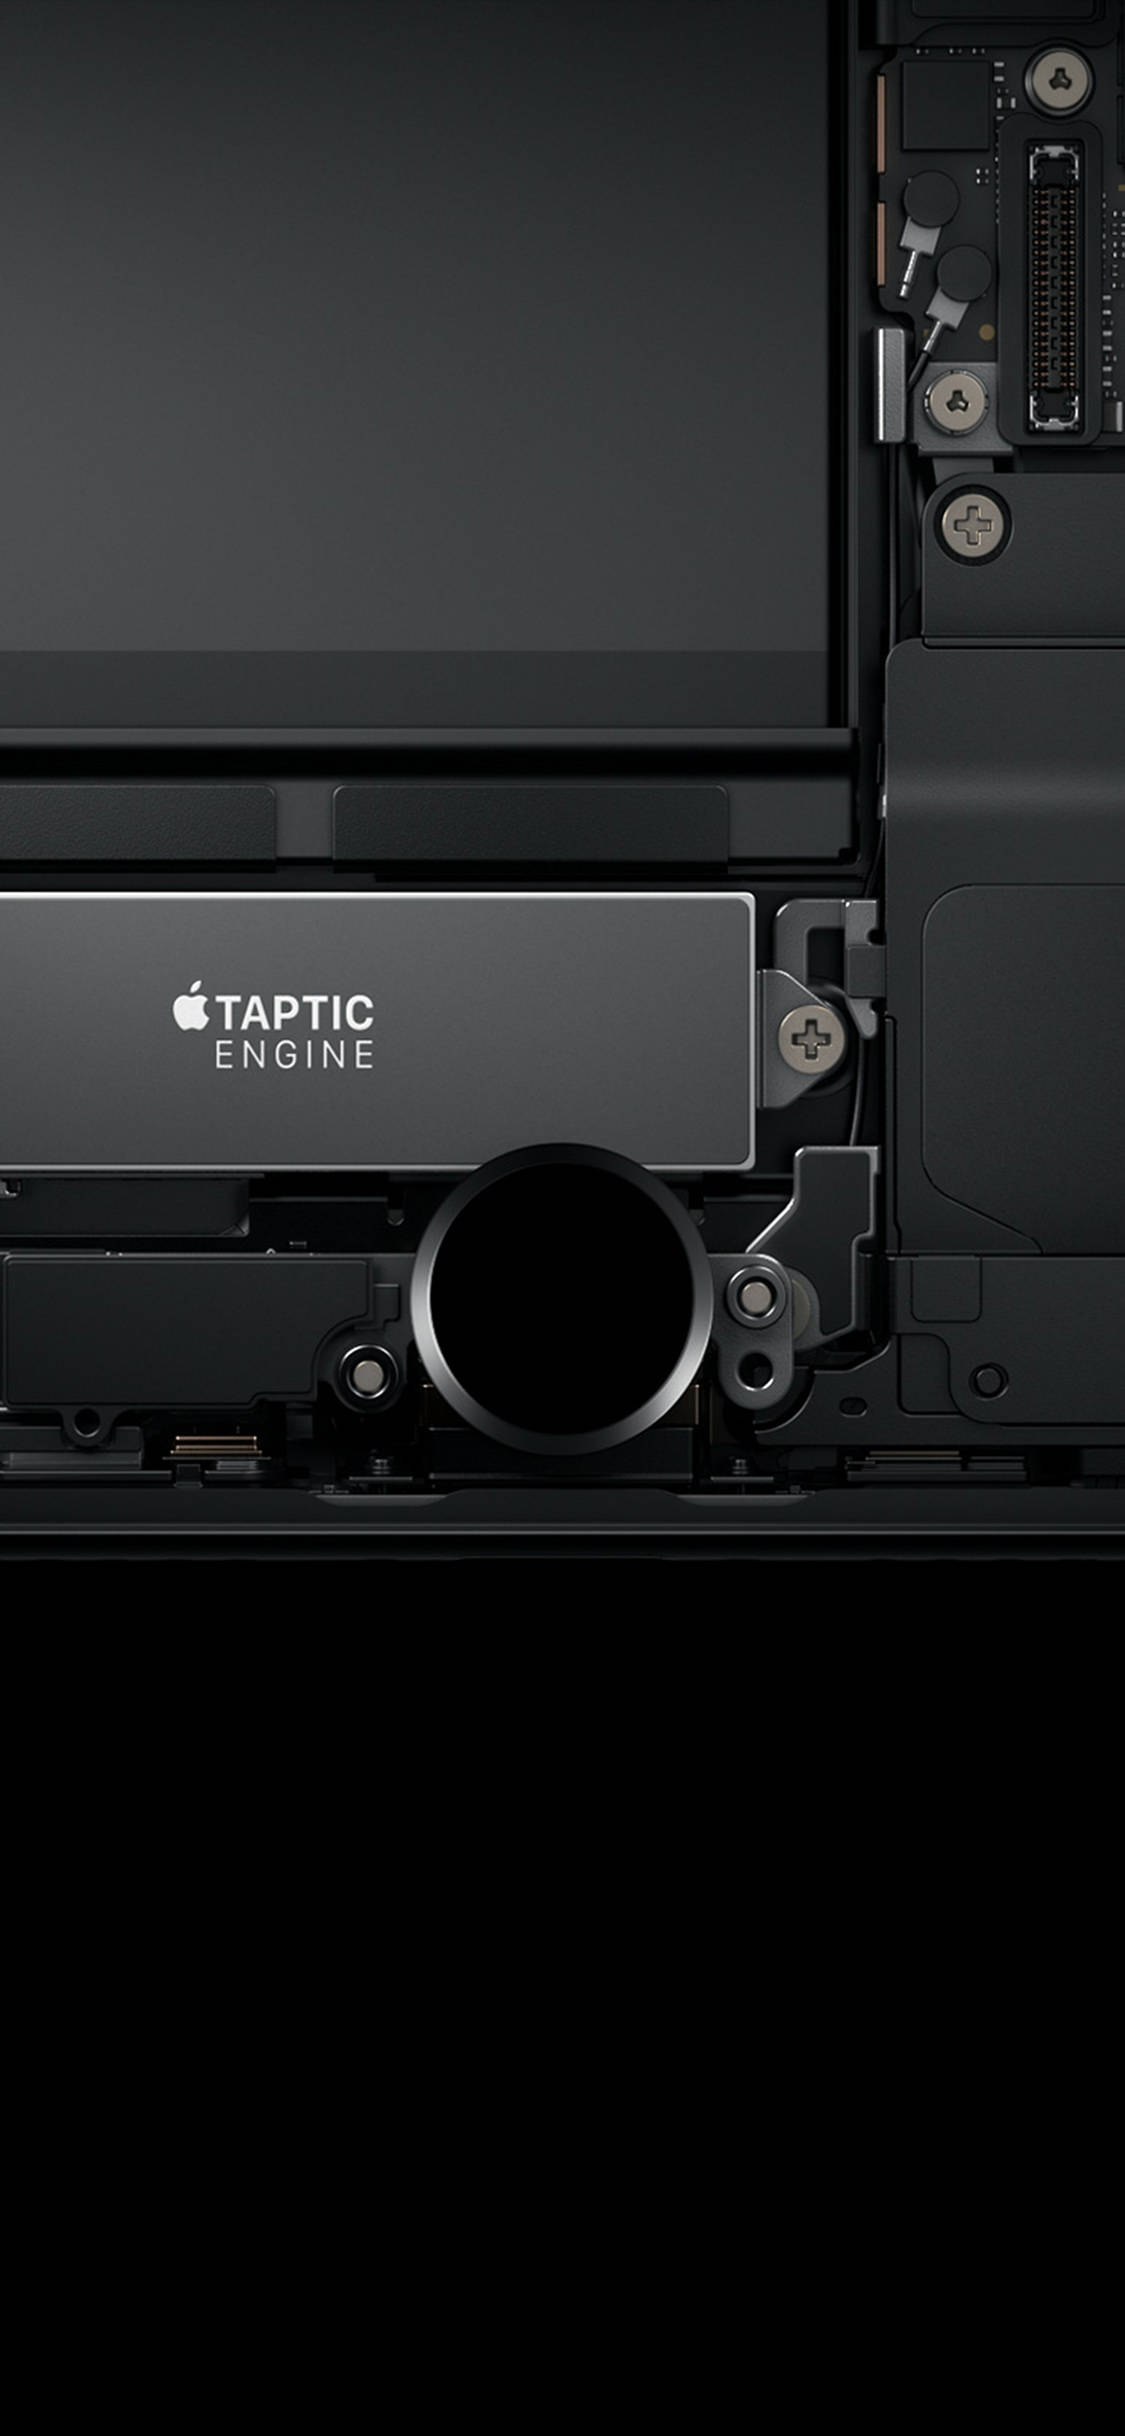 Download Taptic Engine Minimal Dark Iphone Wallpaper 